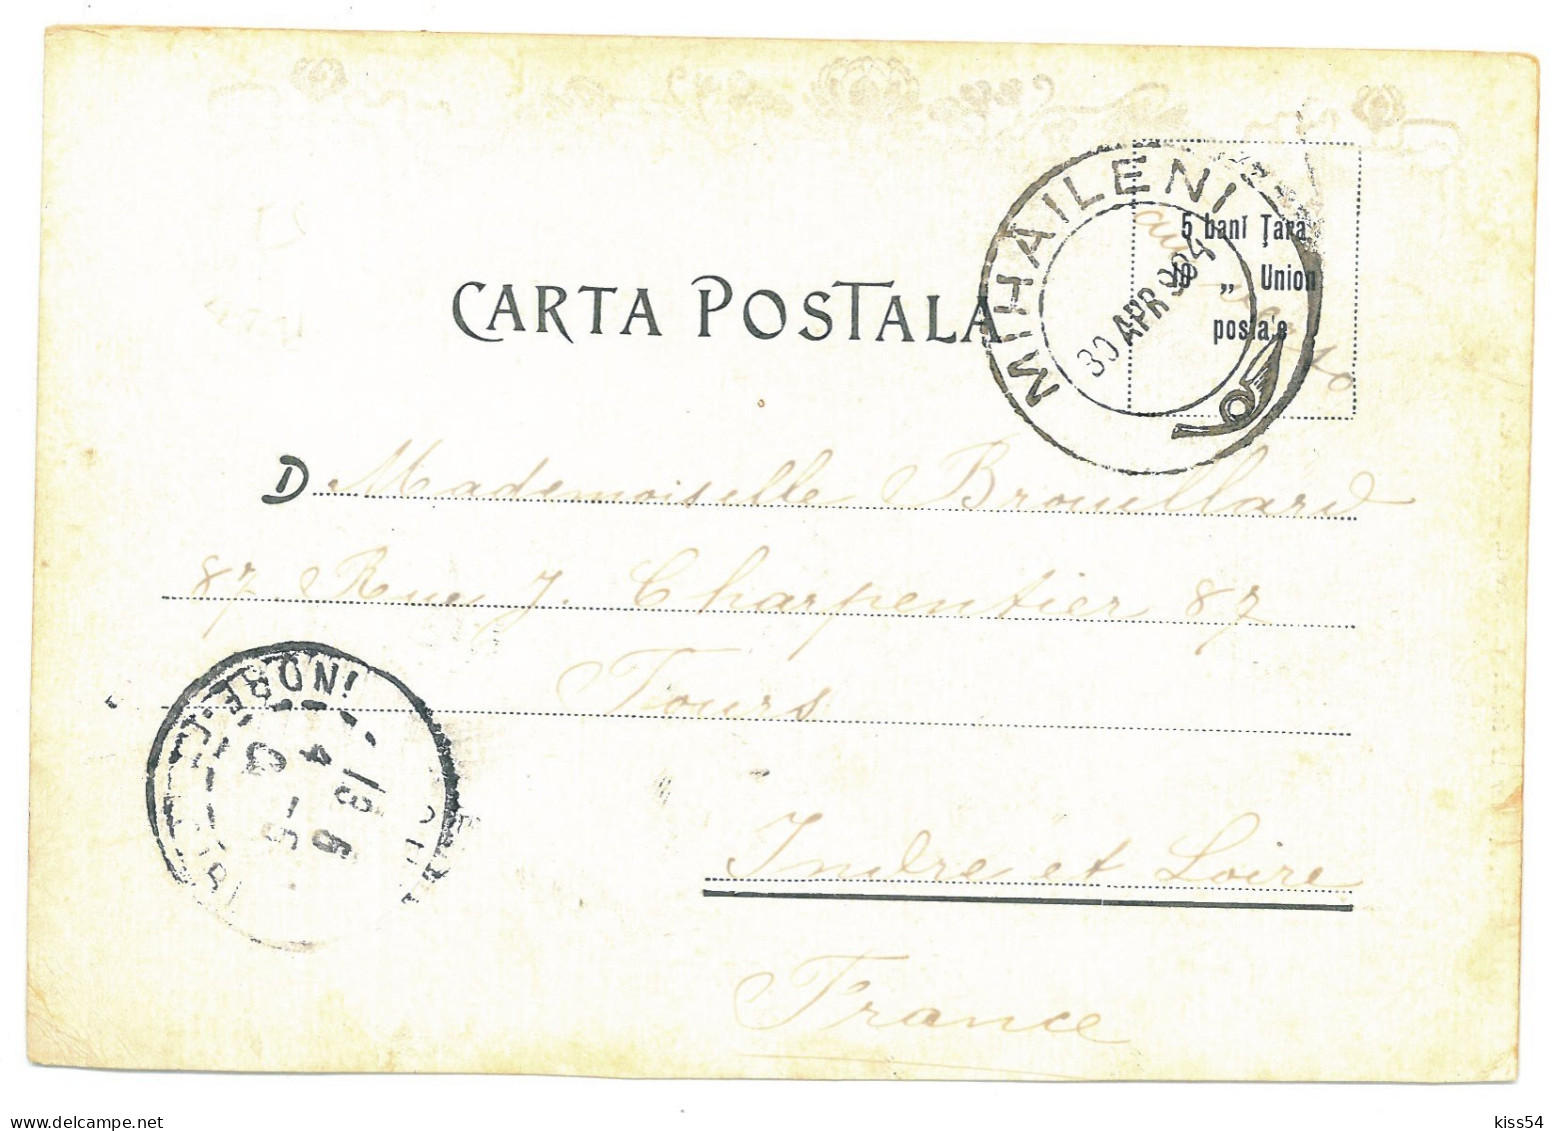 RO 38 - 20635 BUCURESTI, Atheneum, Music, Romania - Old Postcard - Used - 1904 - Roemenië